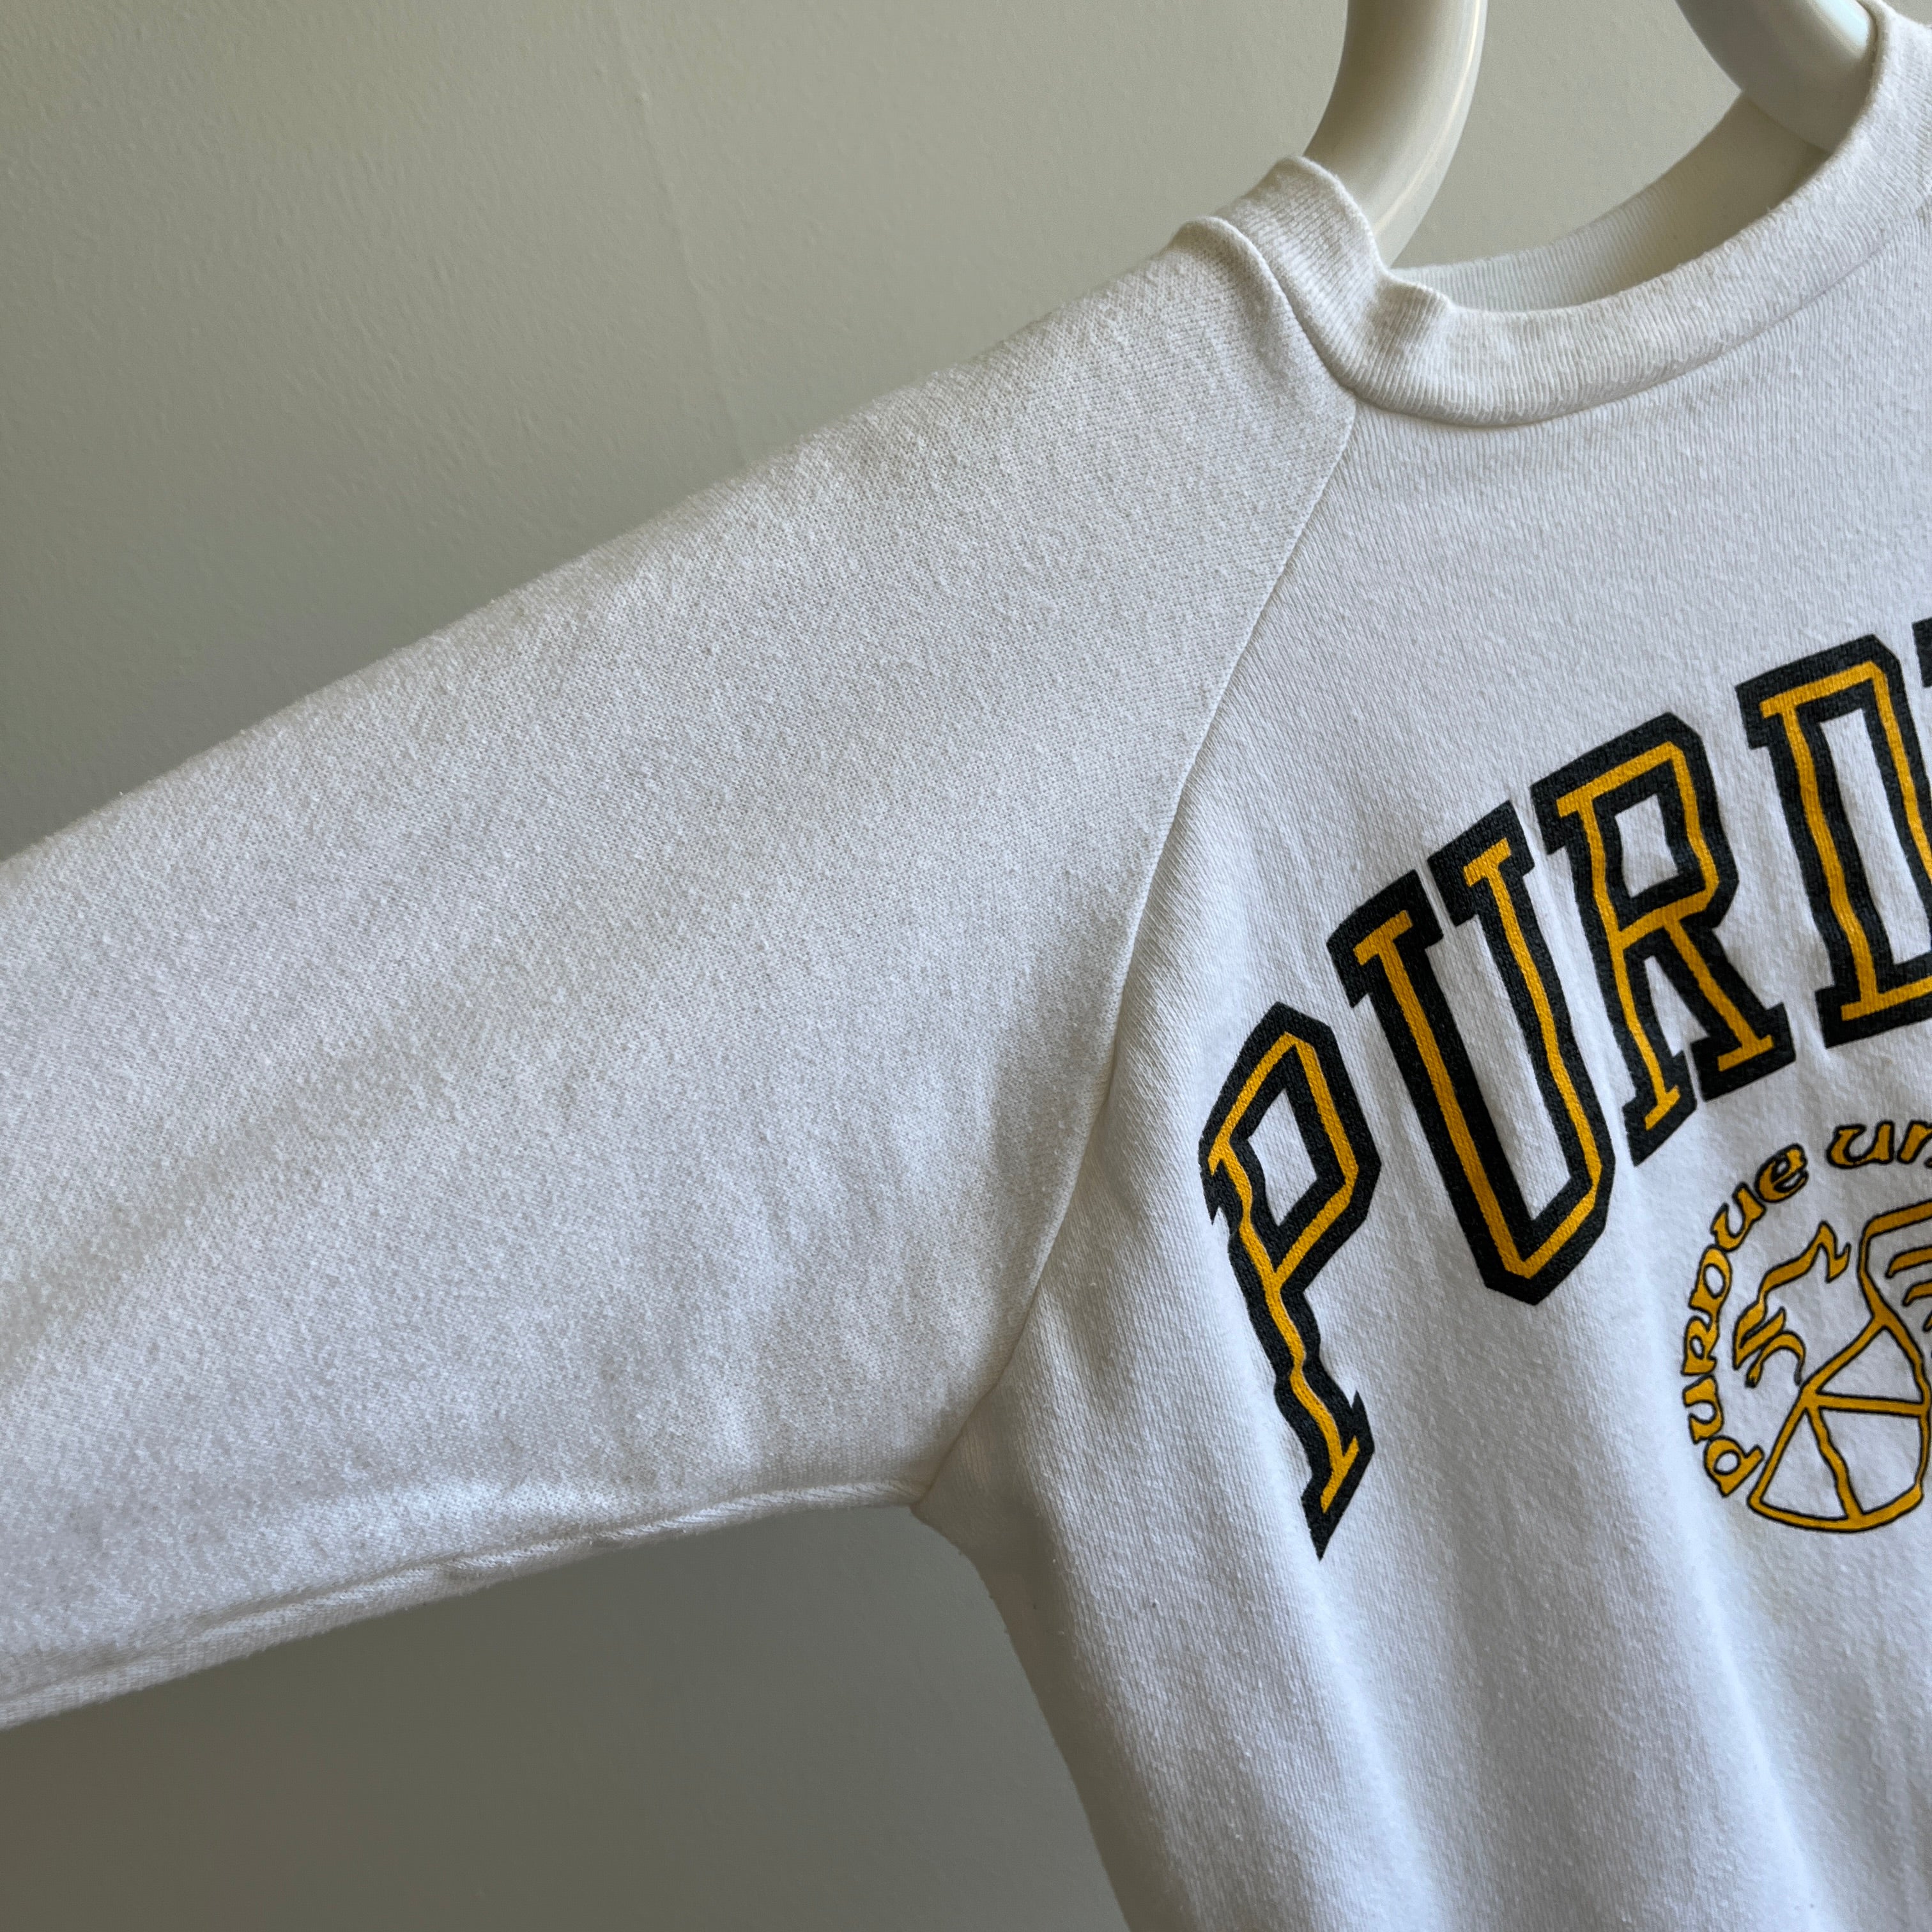 1980s Purdue University Sweatshirt by Healthknit